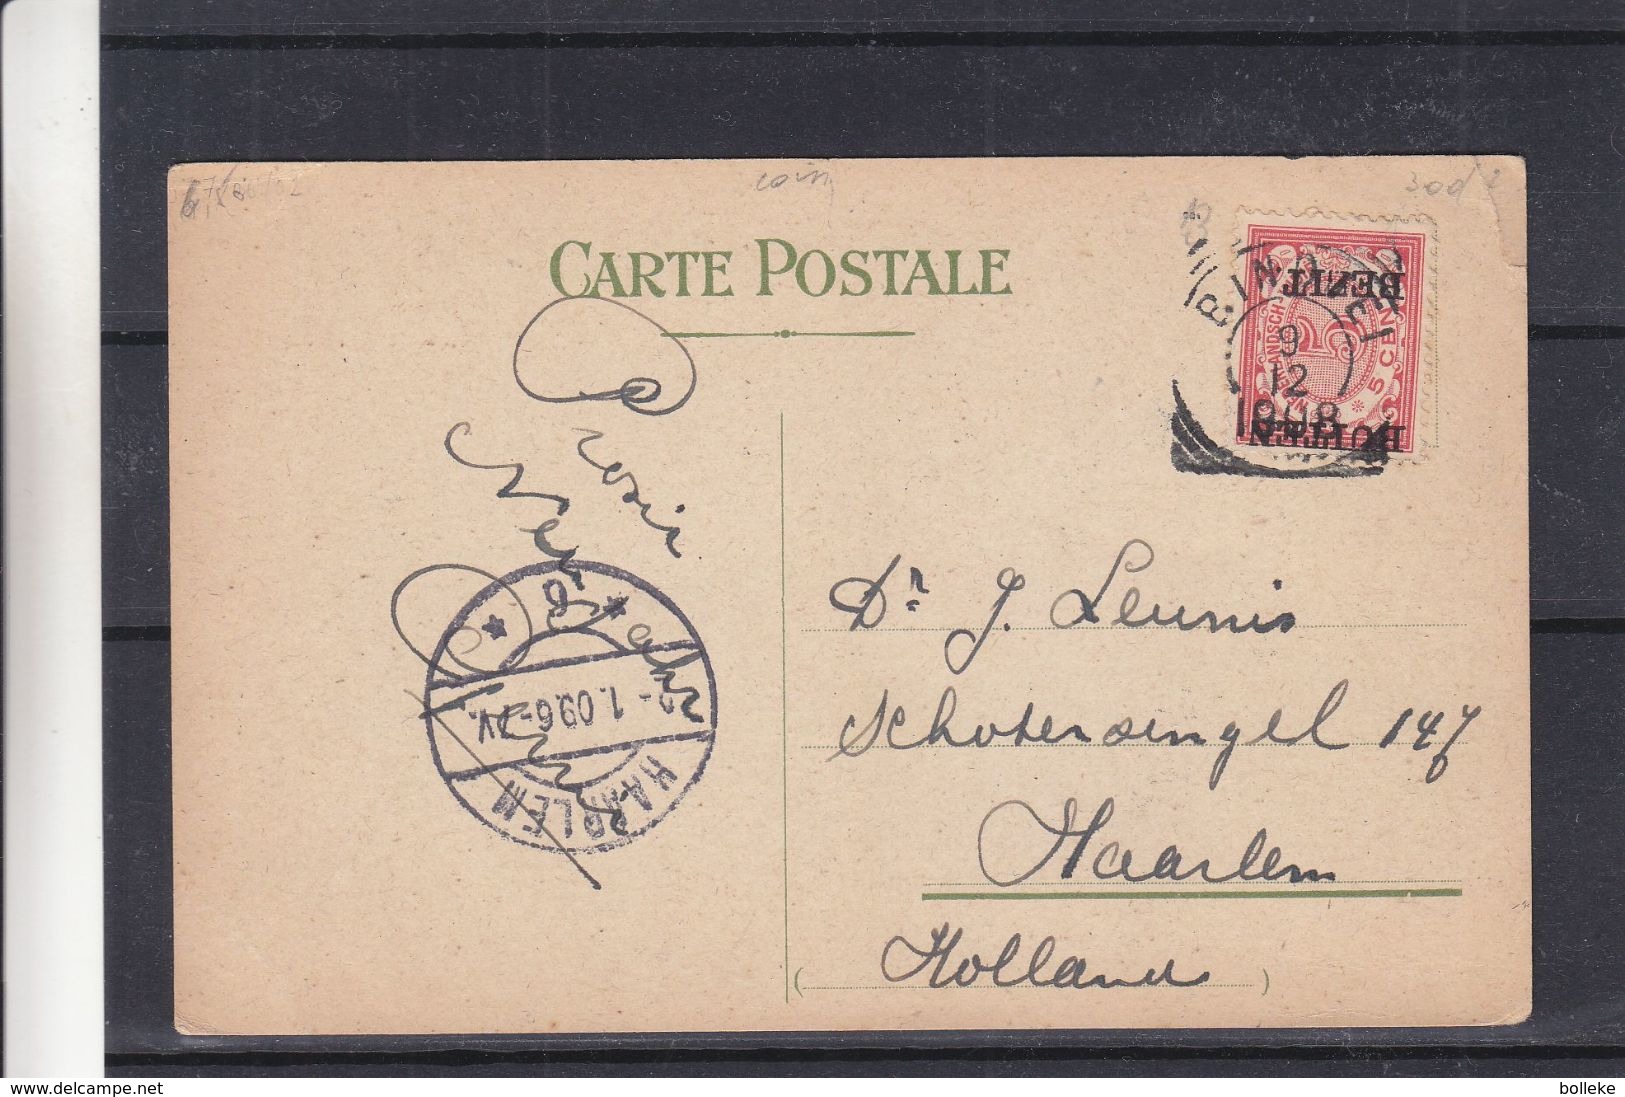 Indes Néerlandaises - Carte Postale De 1908 - Oblit Bindjei  ? - Exp Vers Haarlem Au Pays Bas - Netherlands Indies